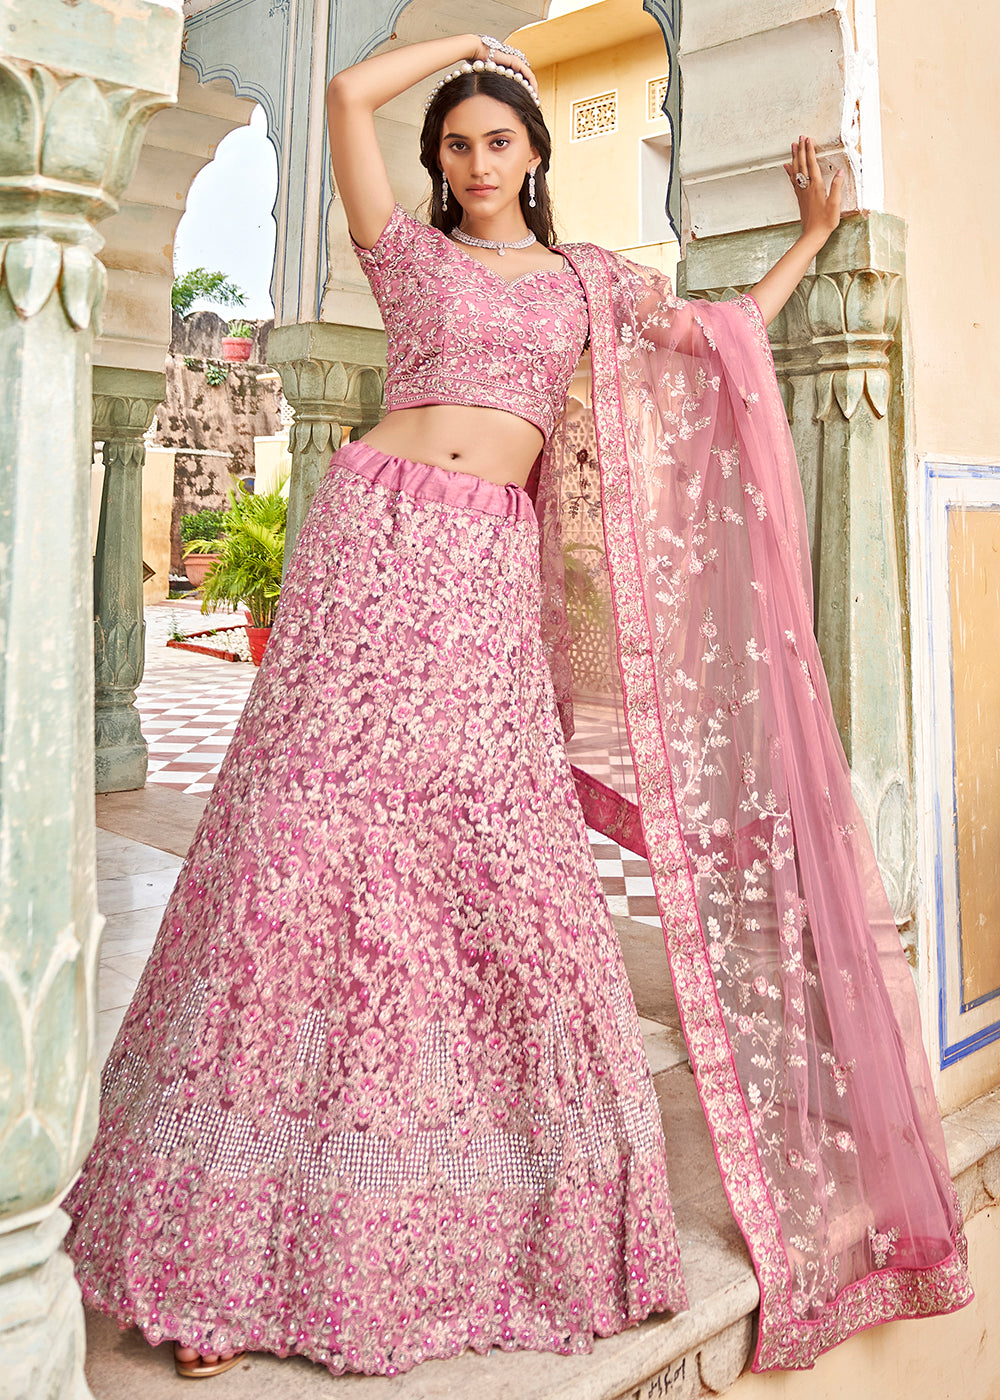 Buy Now Wedding Wear Pink Heavy Embroidered Bridal Lehenga Choli Online in USA, UK, Canada & Worldwide at Empress Clothing.